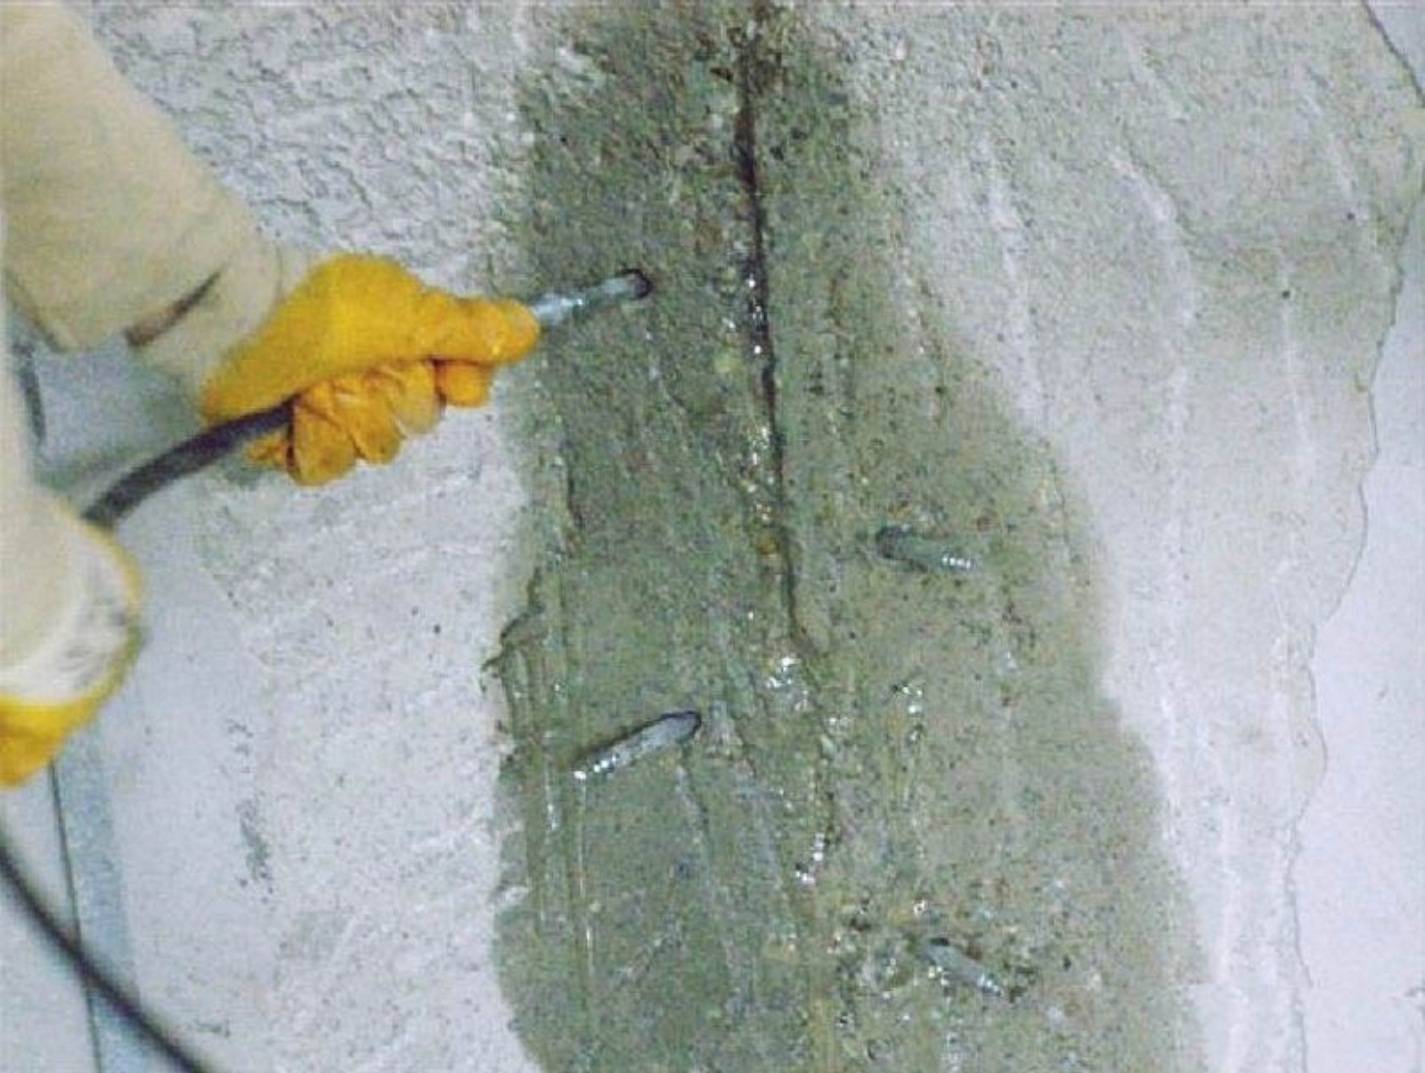 Технология инъектирования бетона — описание процесса